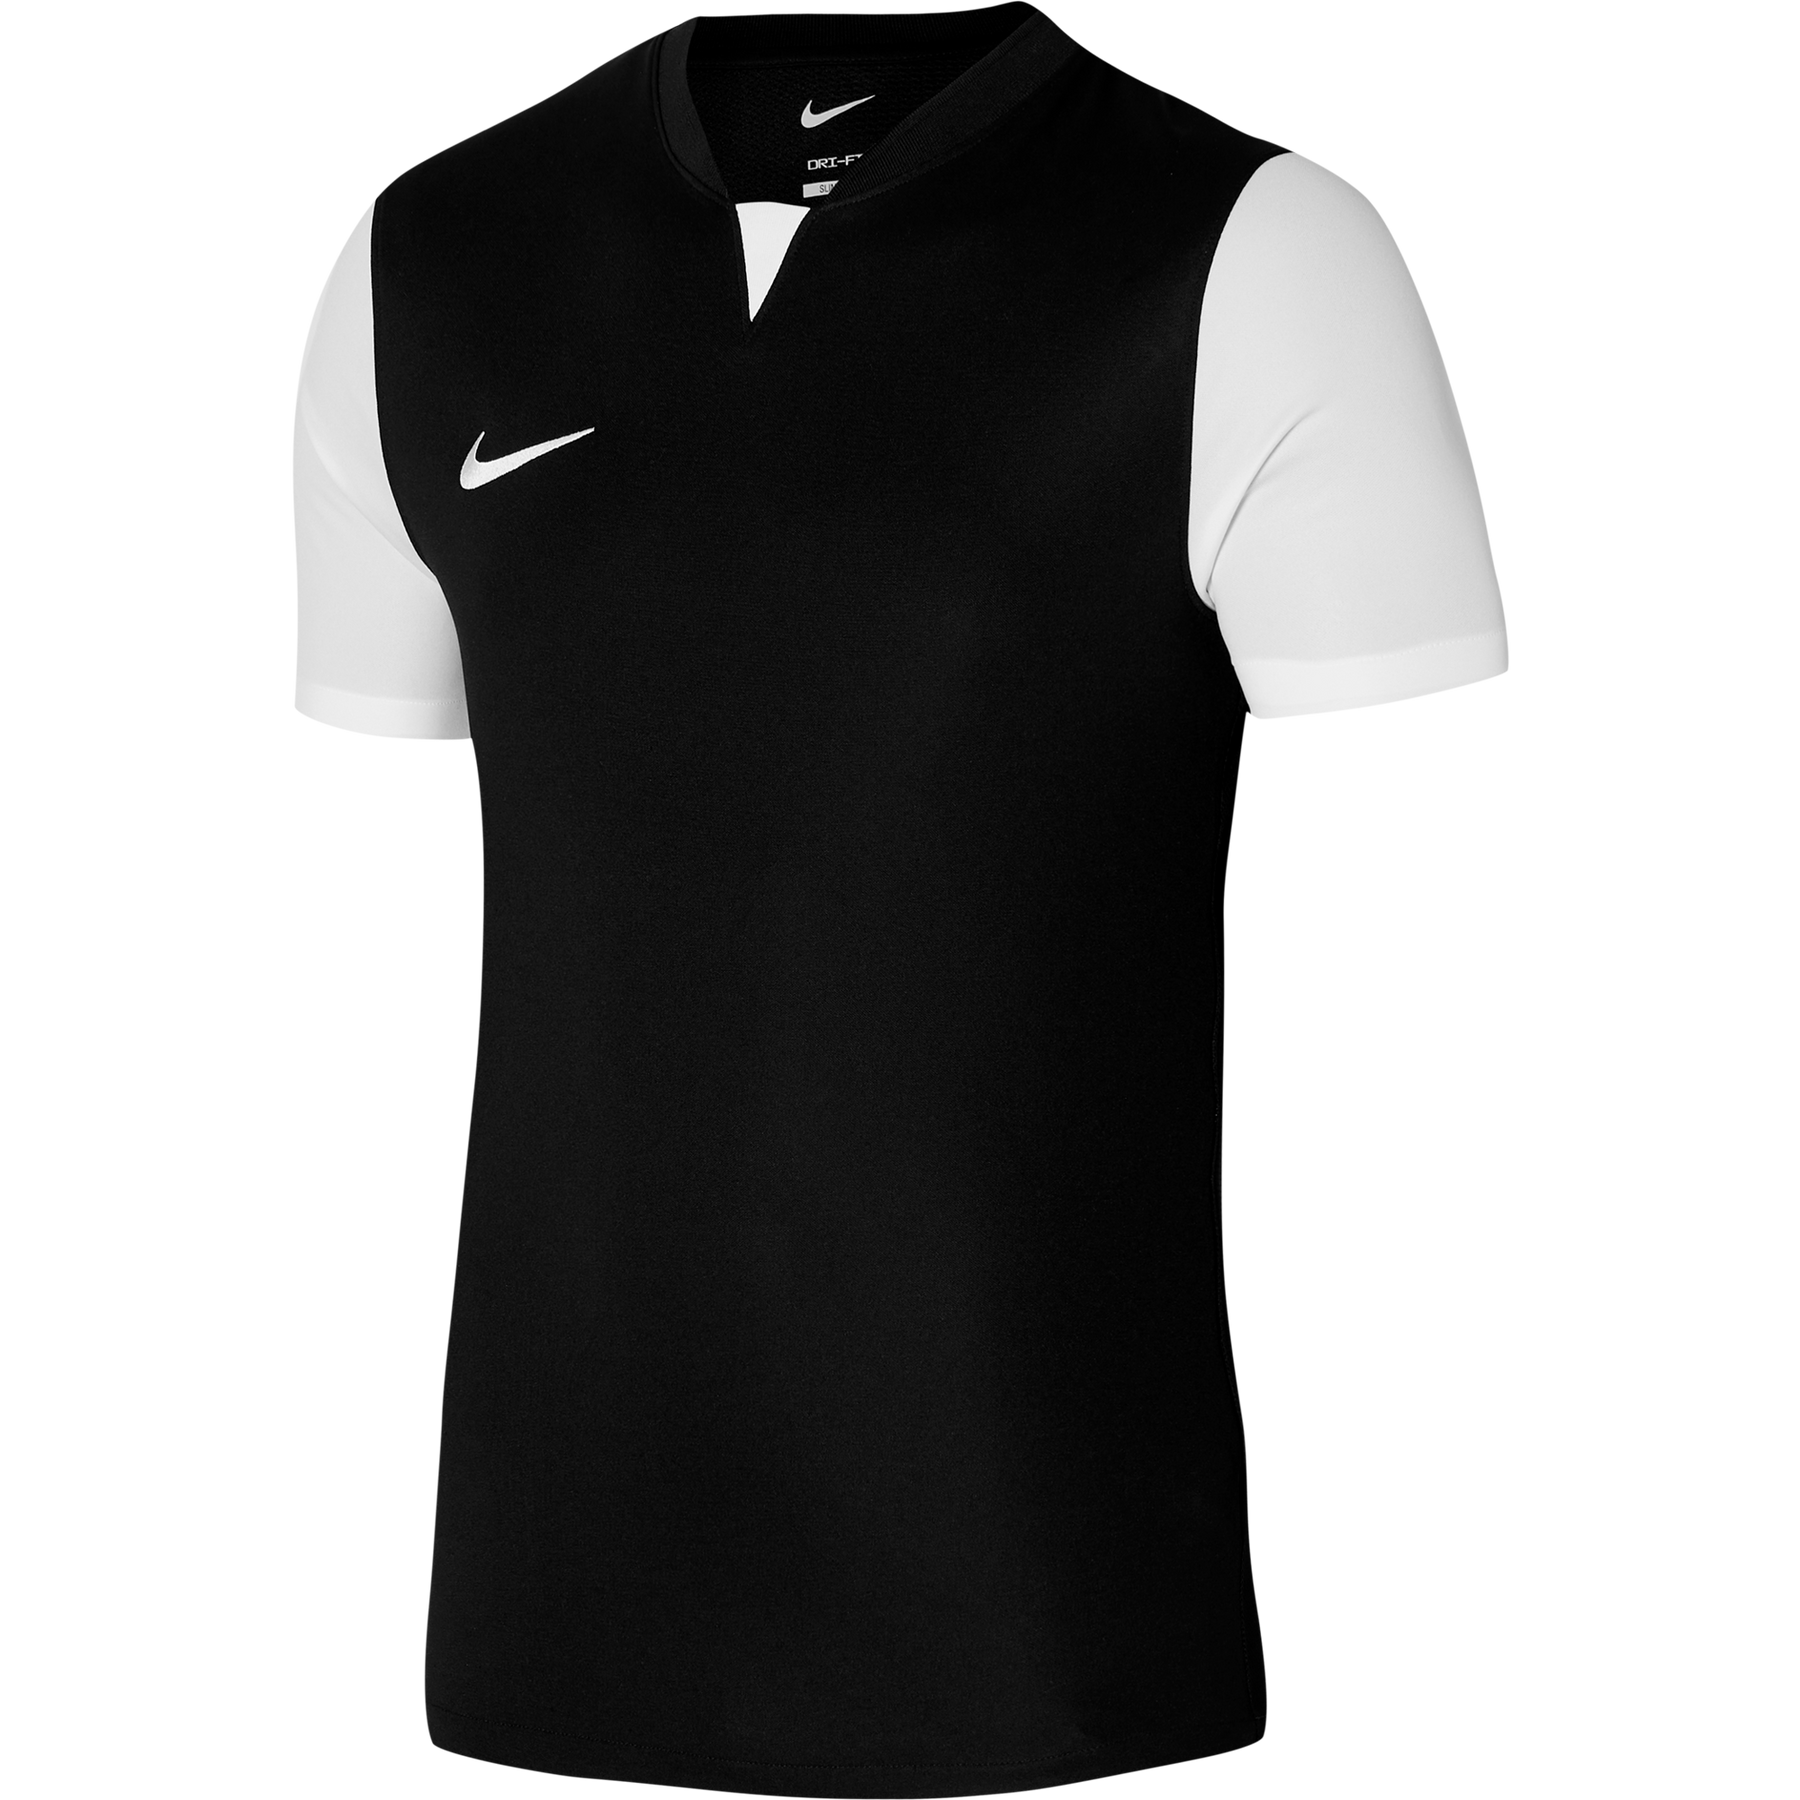 Nike Trophy V Jersey in Green - Size XL